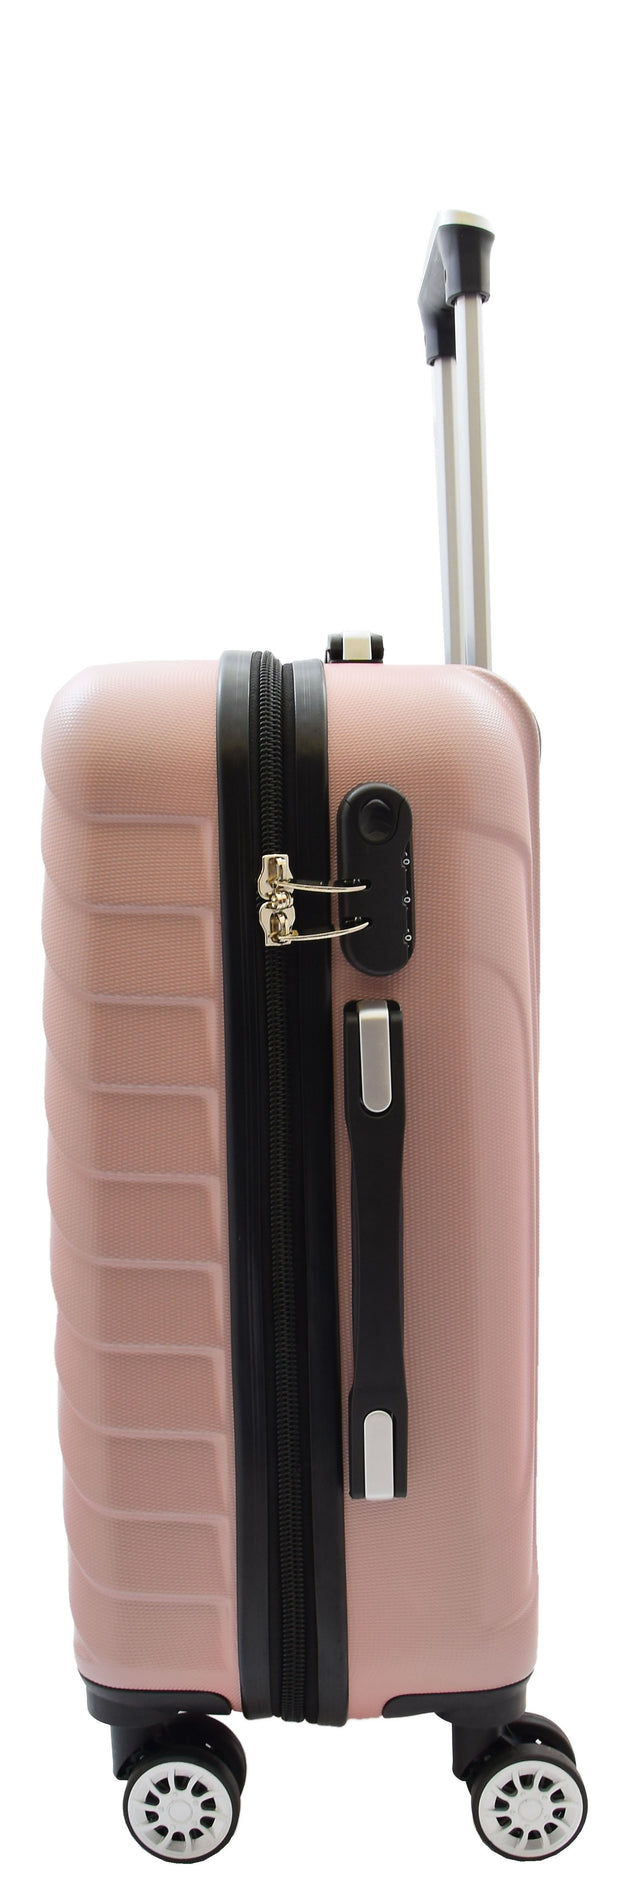 4 Wheel Suitcases Hard Shell Rose Gold ABS Digit Lock Lightweight Luggage Travel Bag Melton cabin-2